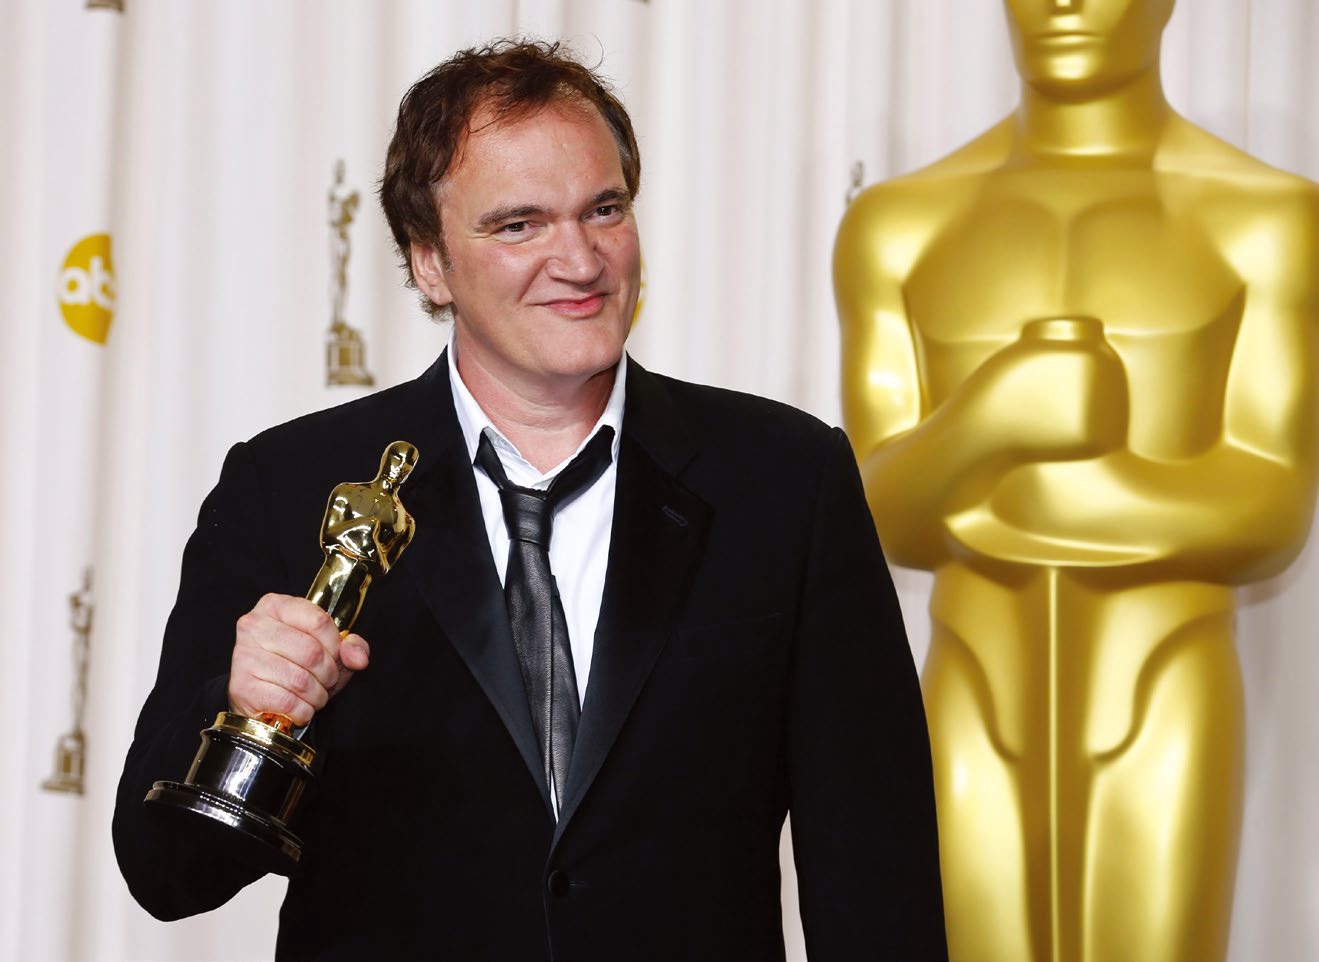 Quentin Tarantino winning his second Oscar